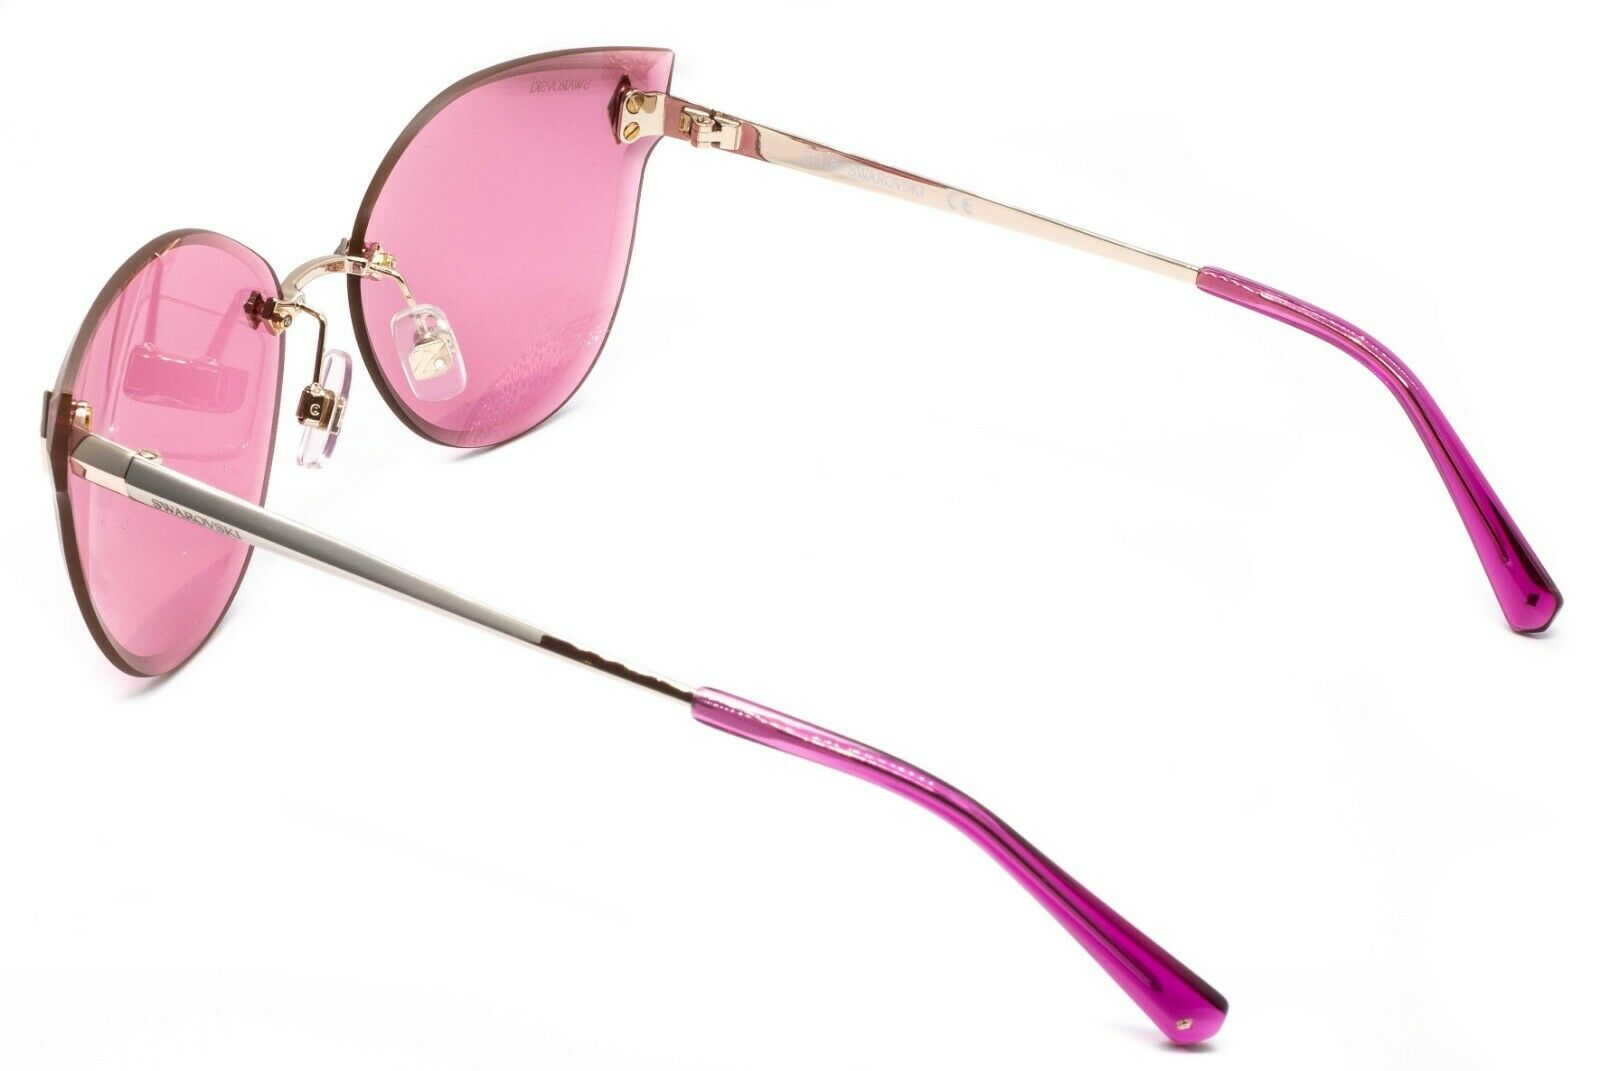 SWAROVSKI SK 158 32S *2 61mm Sunglasses Shades Eyewear Frames Ladies BNIB - New